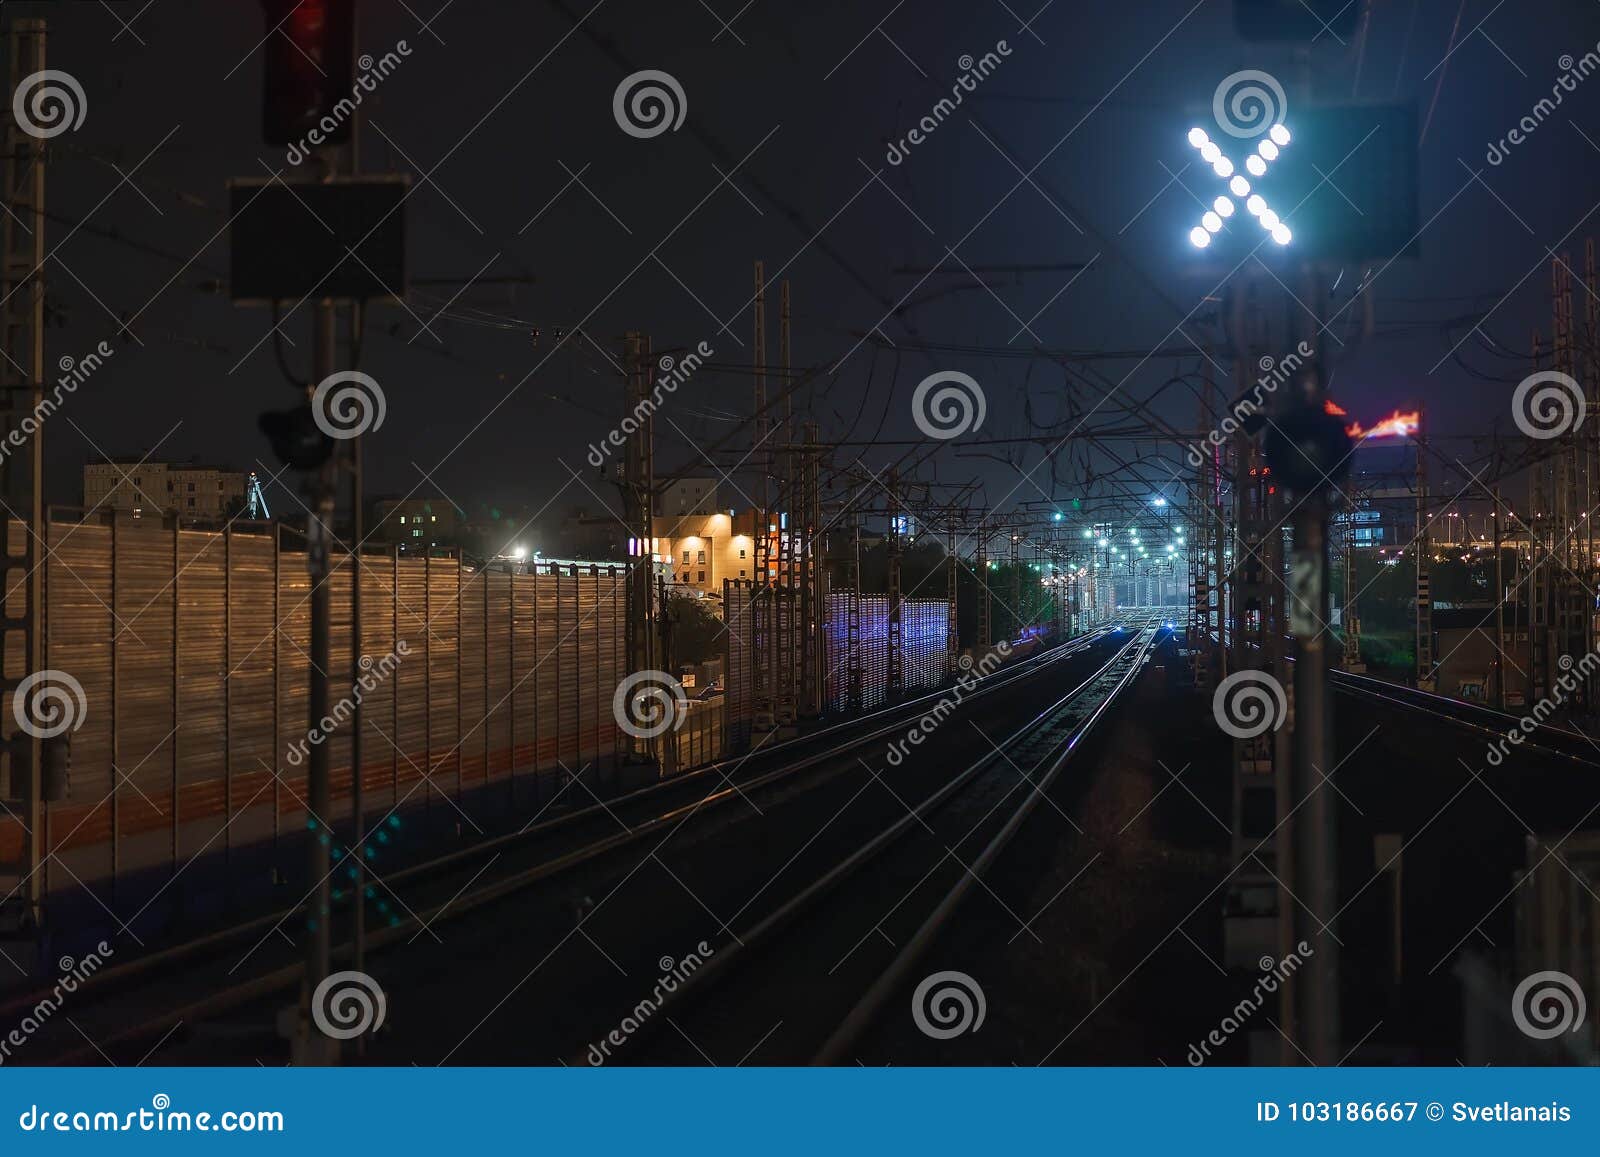 Railroad Night Scene with Blue Traffic Light and Railway Station Tracks ...